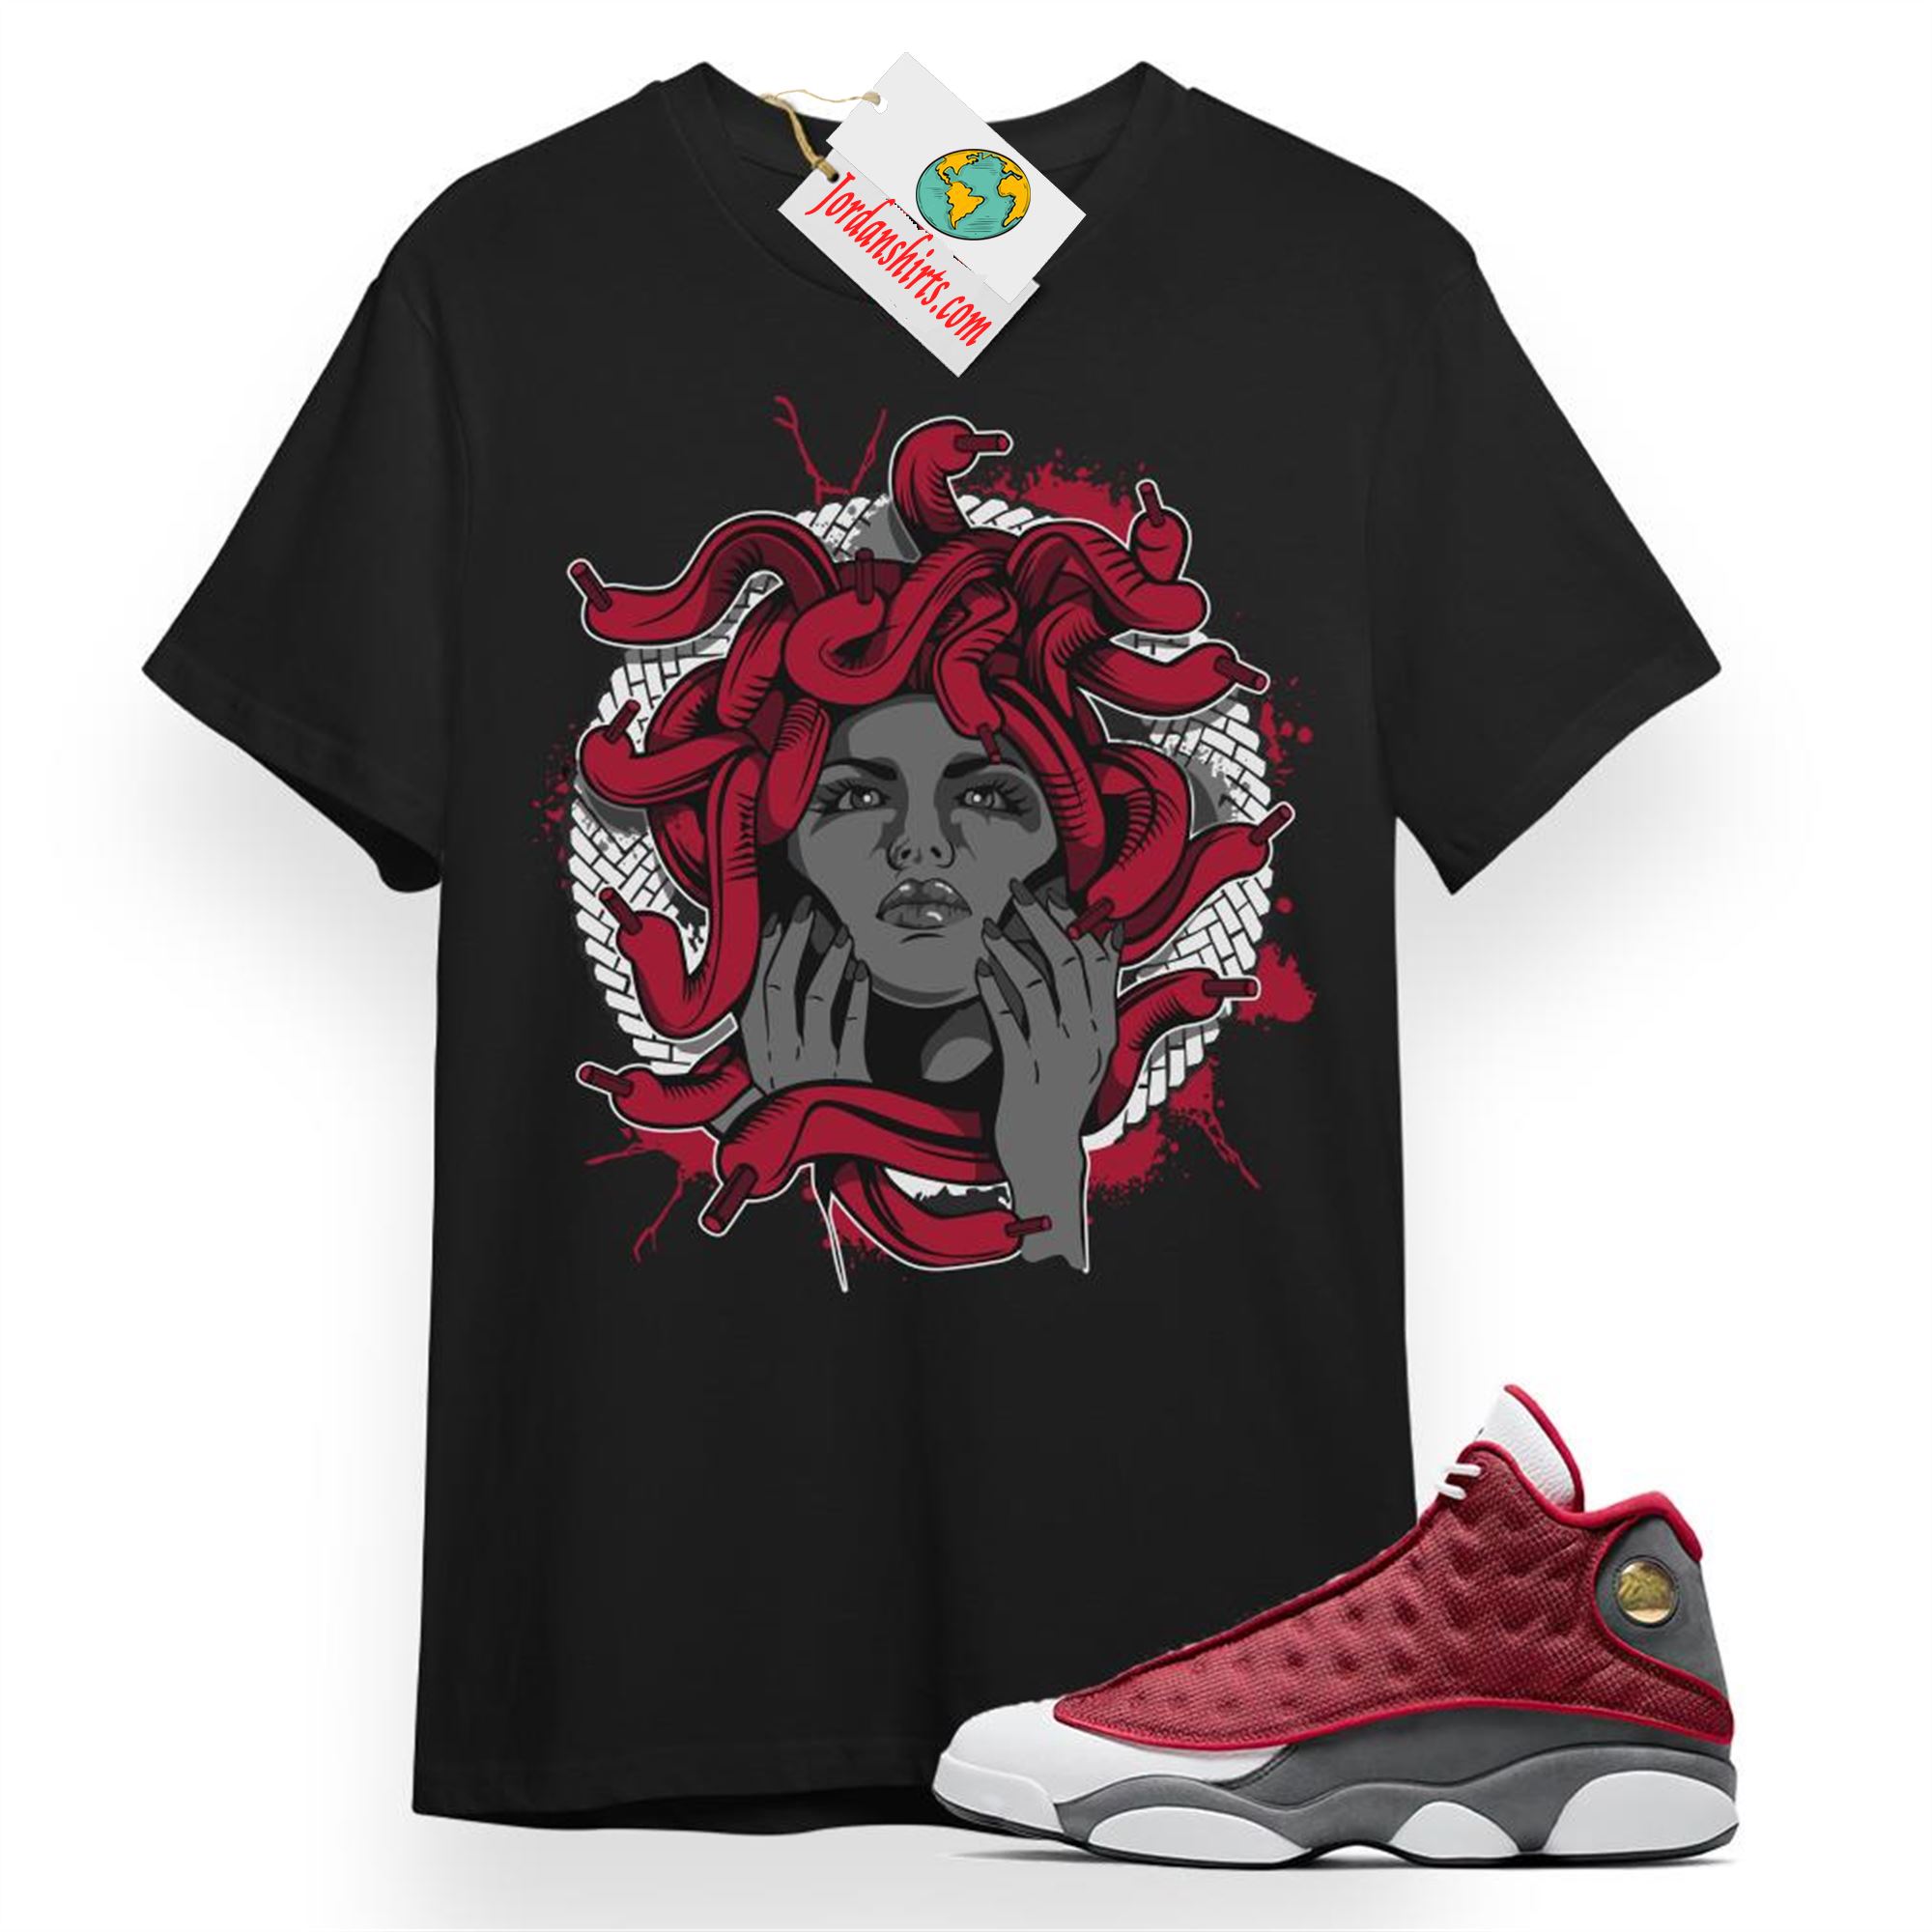 Jordan 13 Shirt, Medusa Black T-shirt Air Jordan 13 Red Flint 13s Full Size Up To 5xl